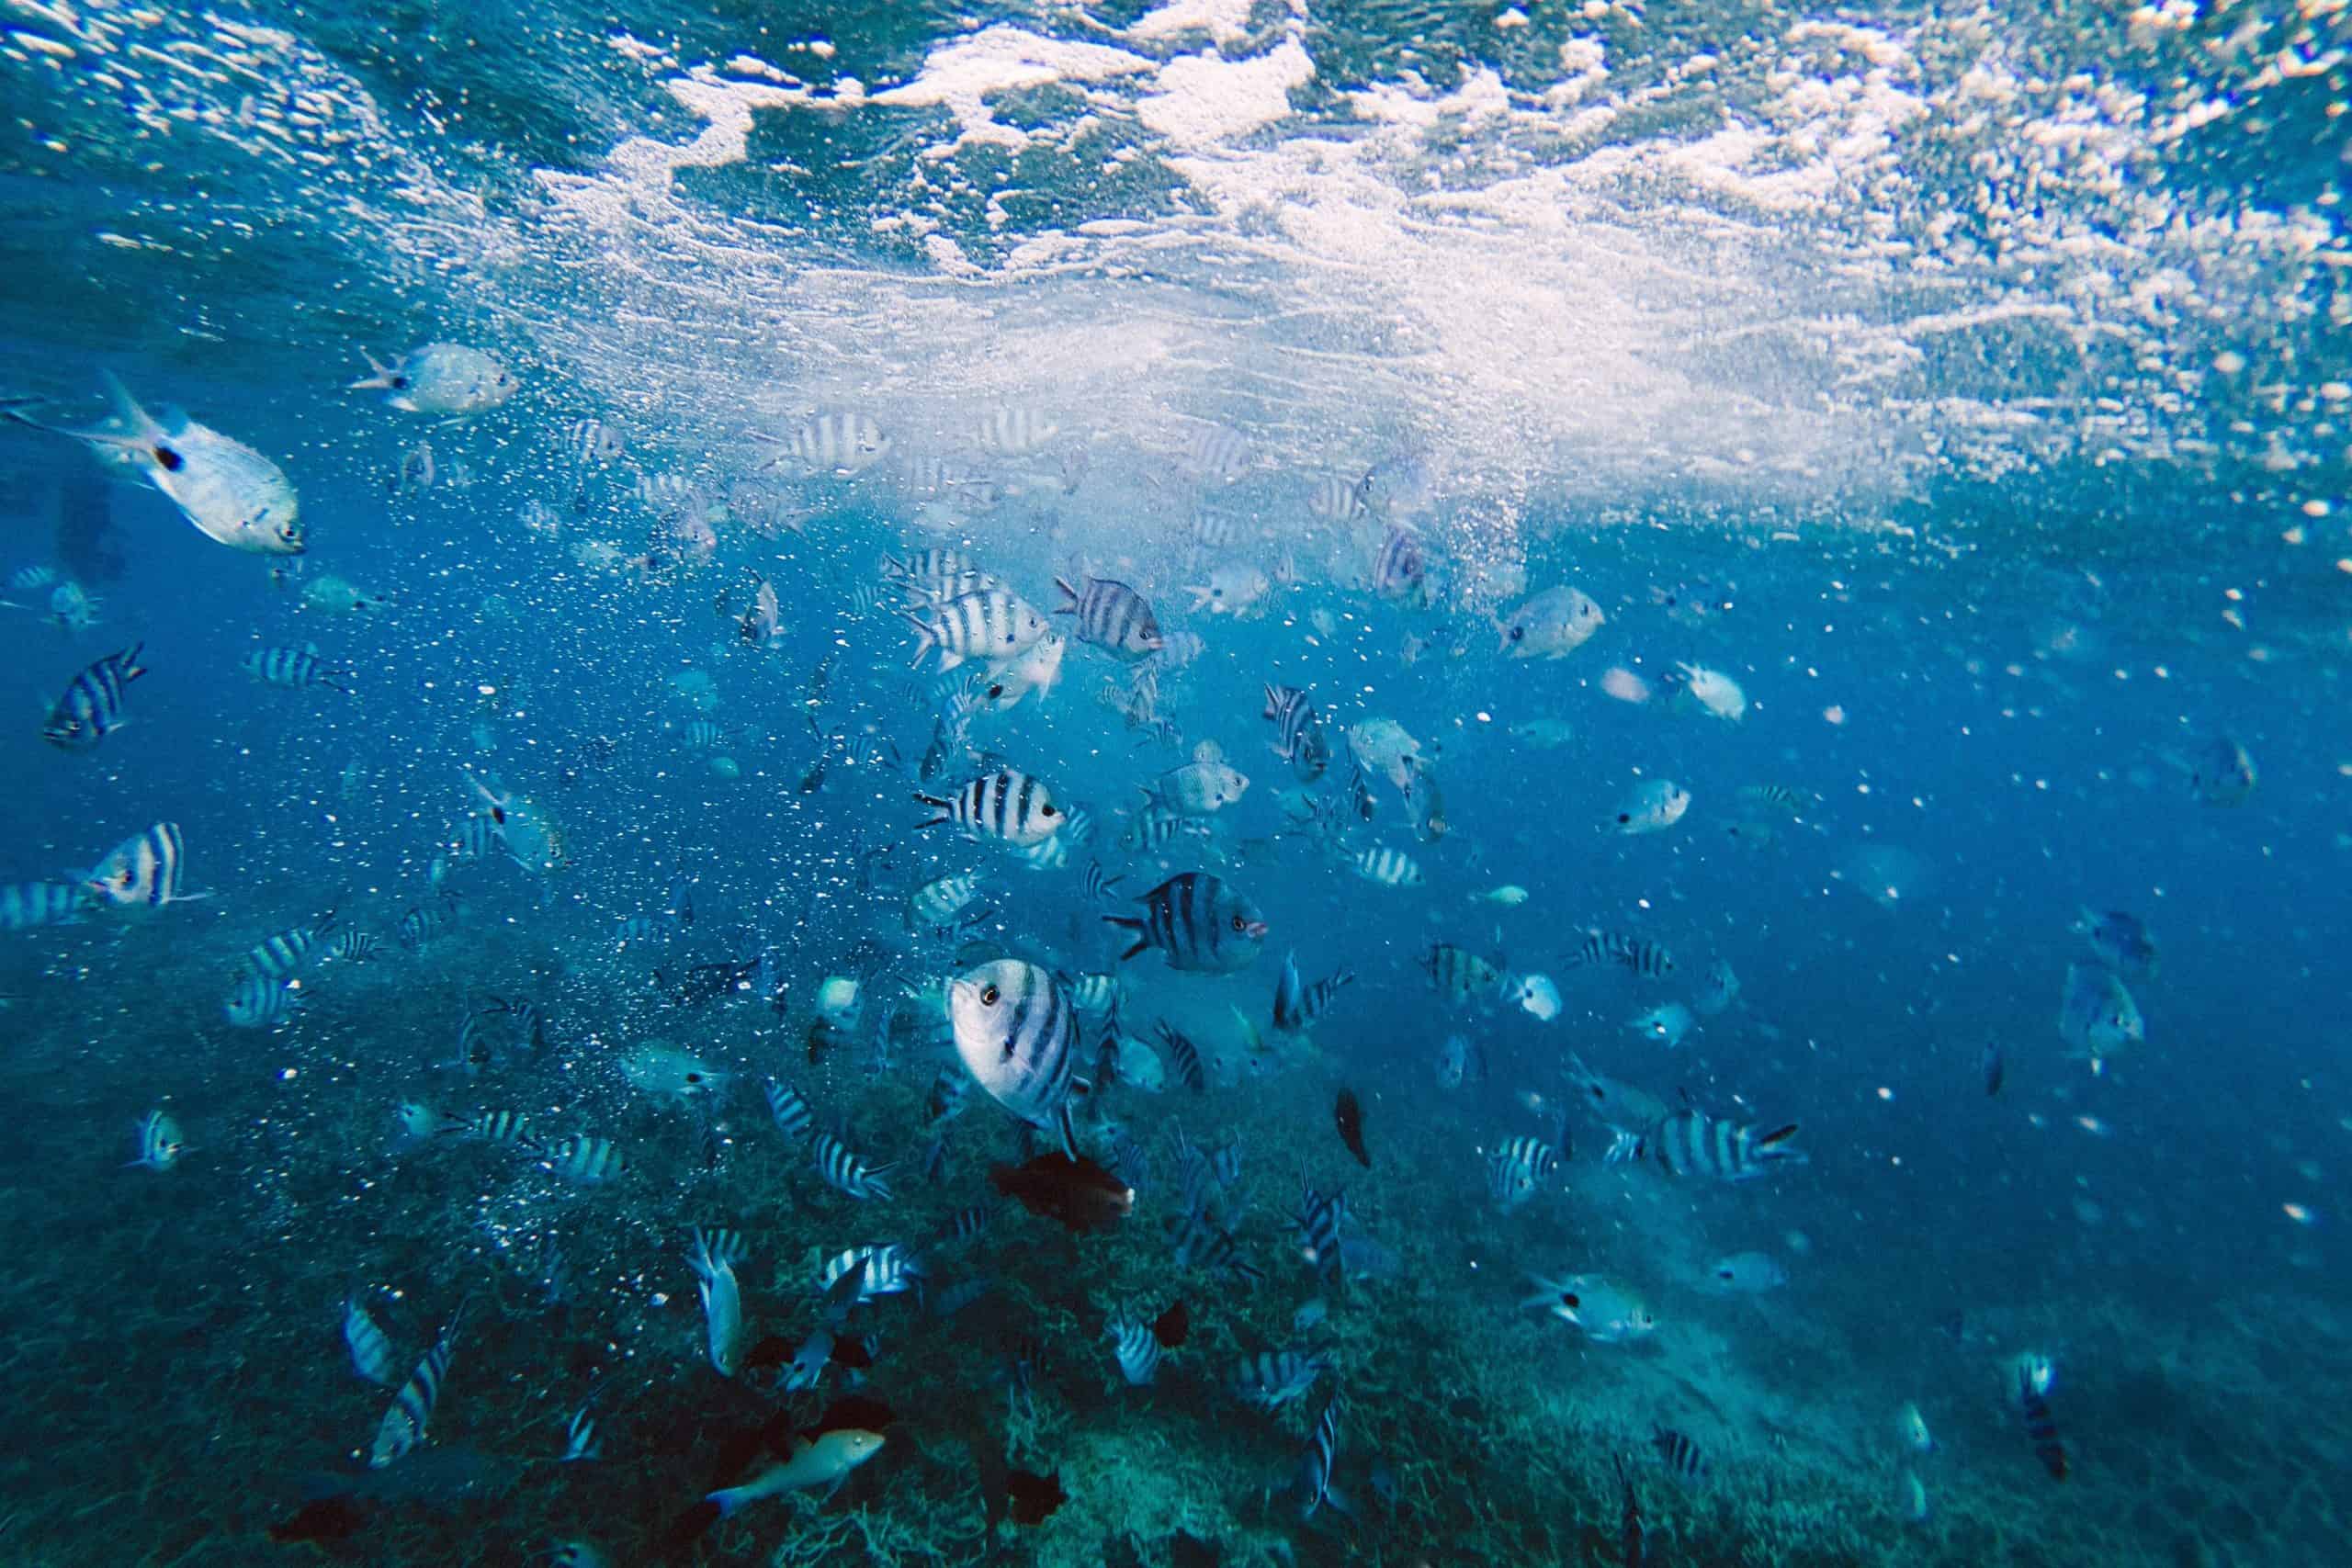 Snorkeling in Mauritius